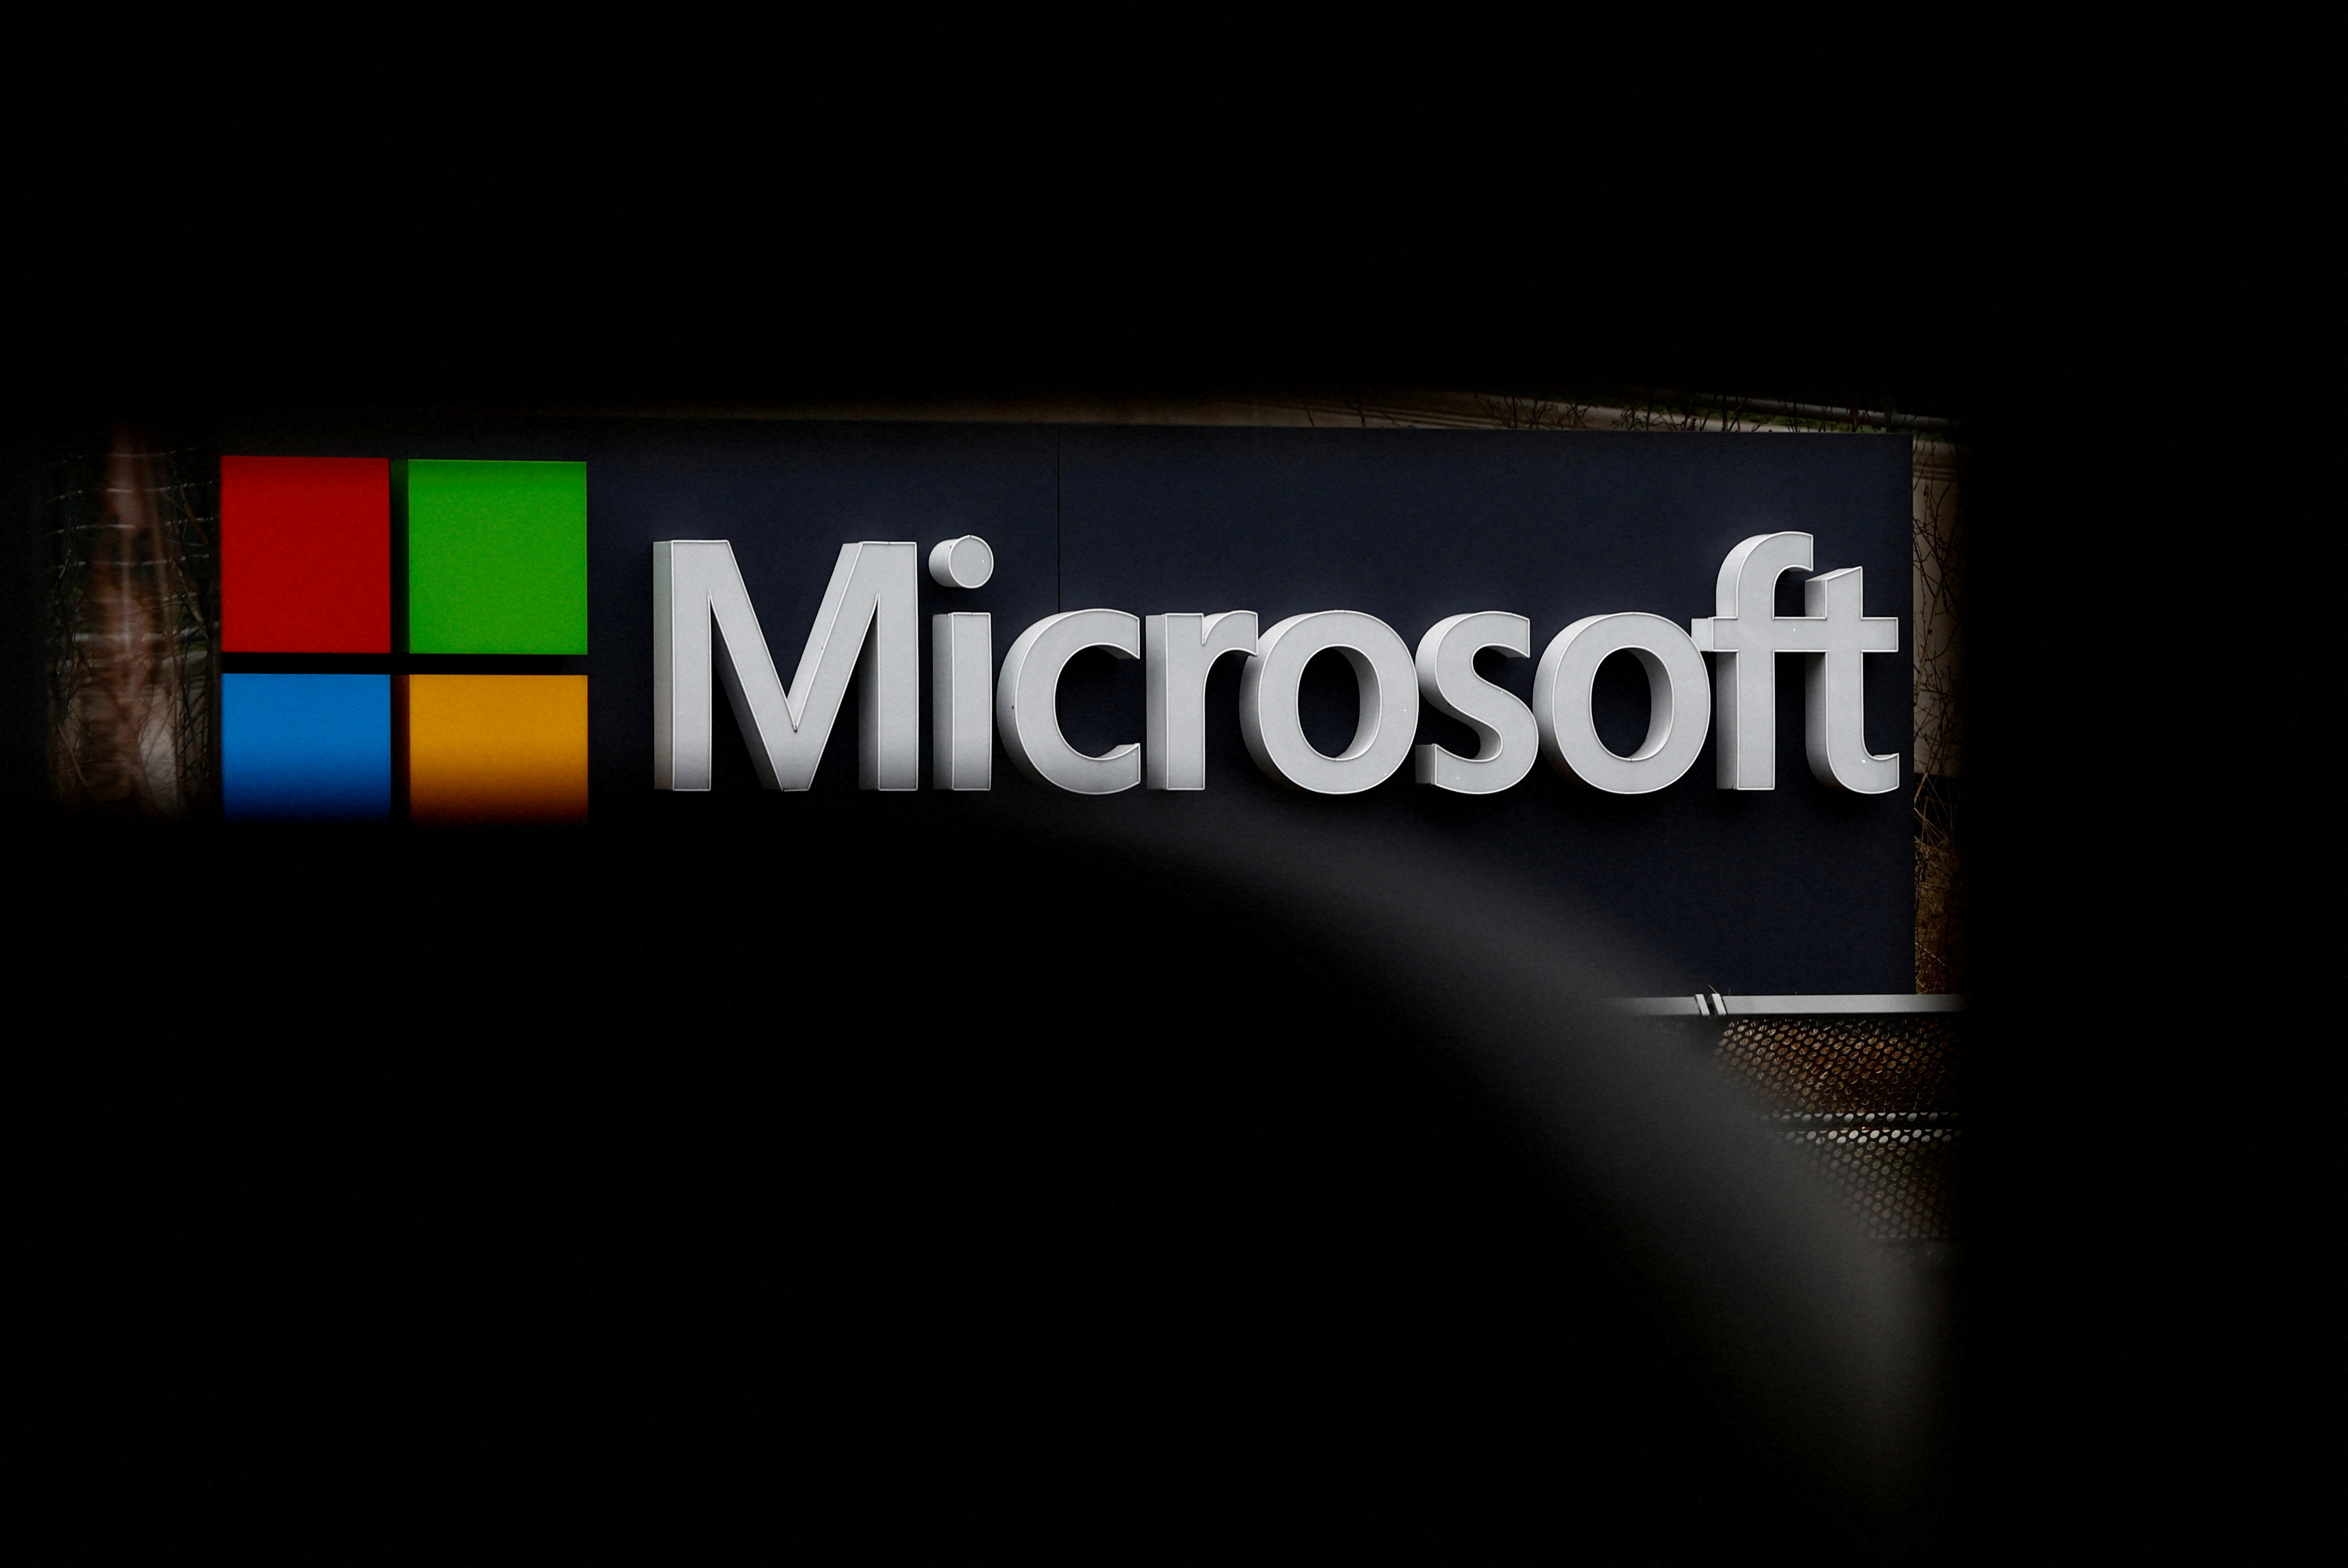 The Microsoft logo appears in Issy-les-Moulineaux near Paris